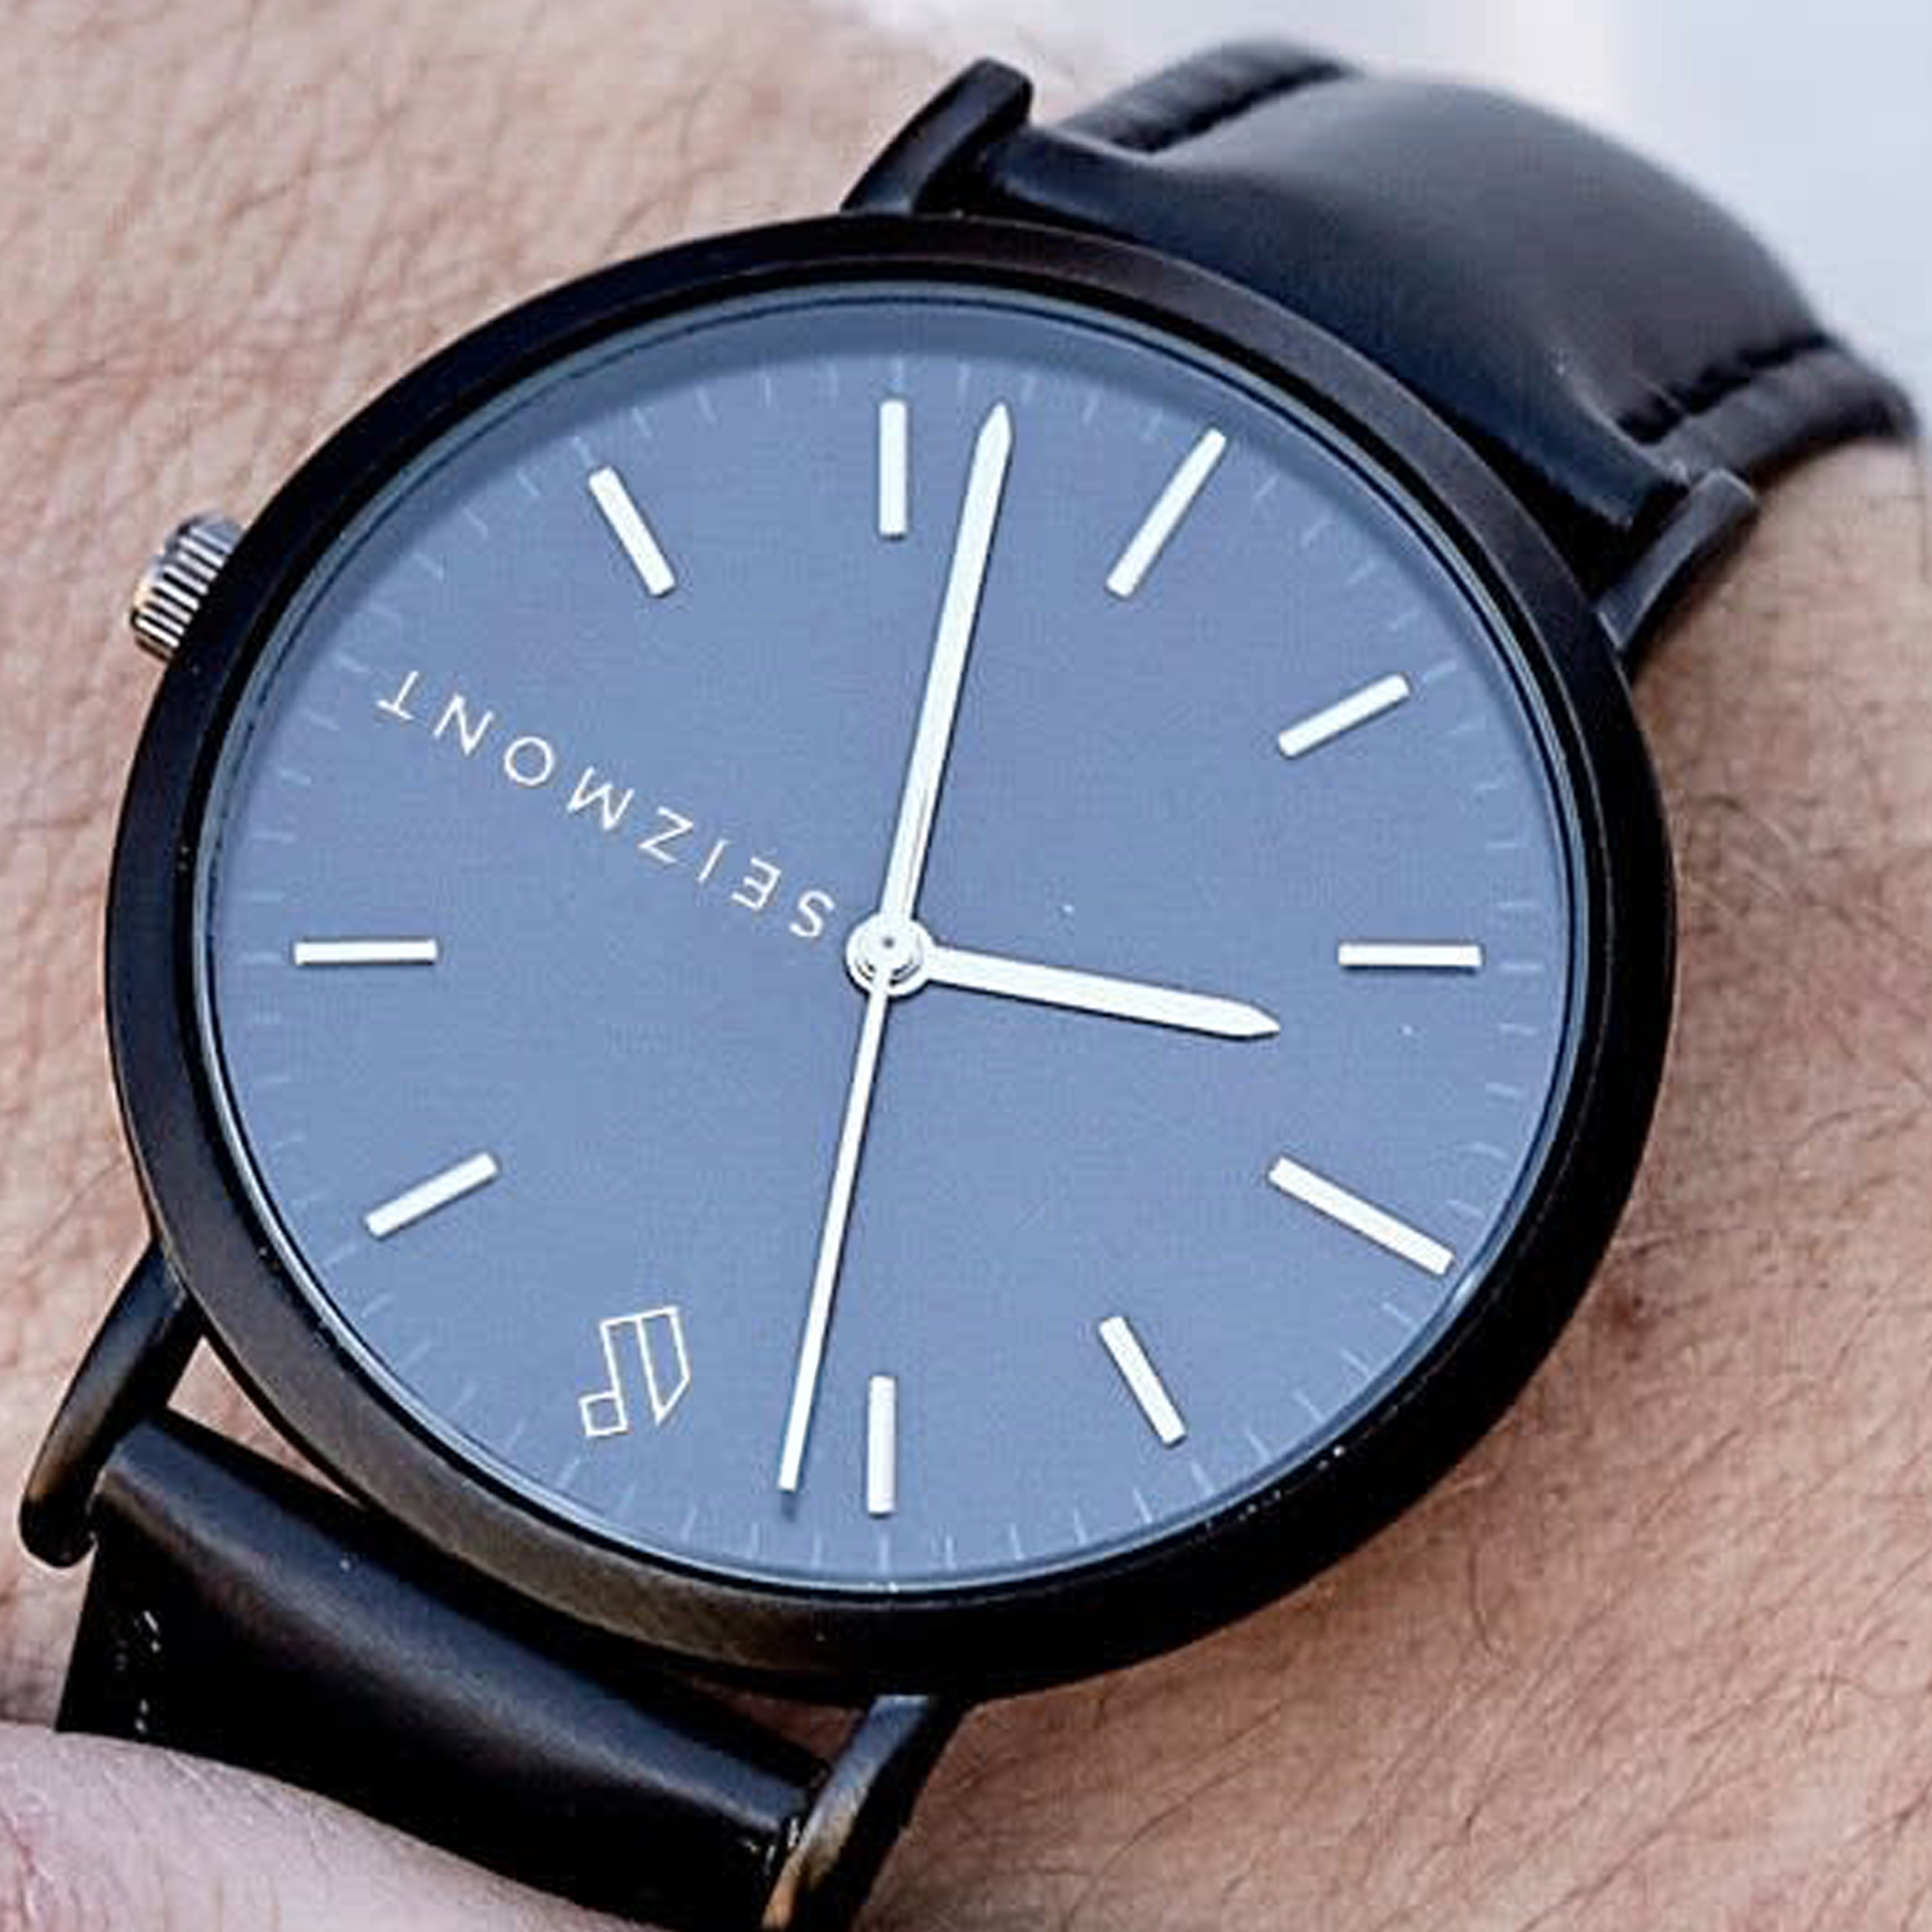  INTIMEMATE Men's Black Watch Analog Wristwatch with